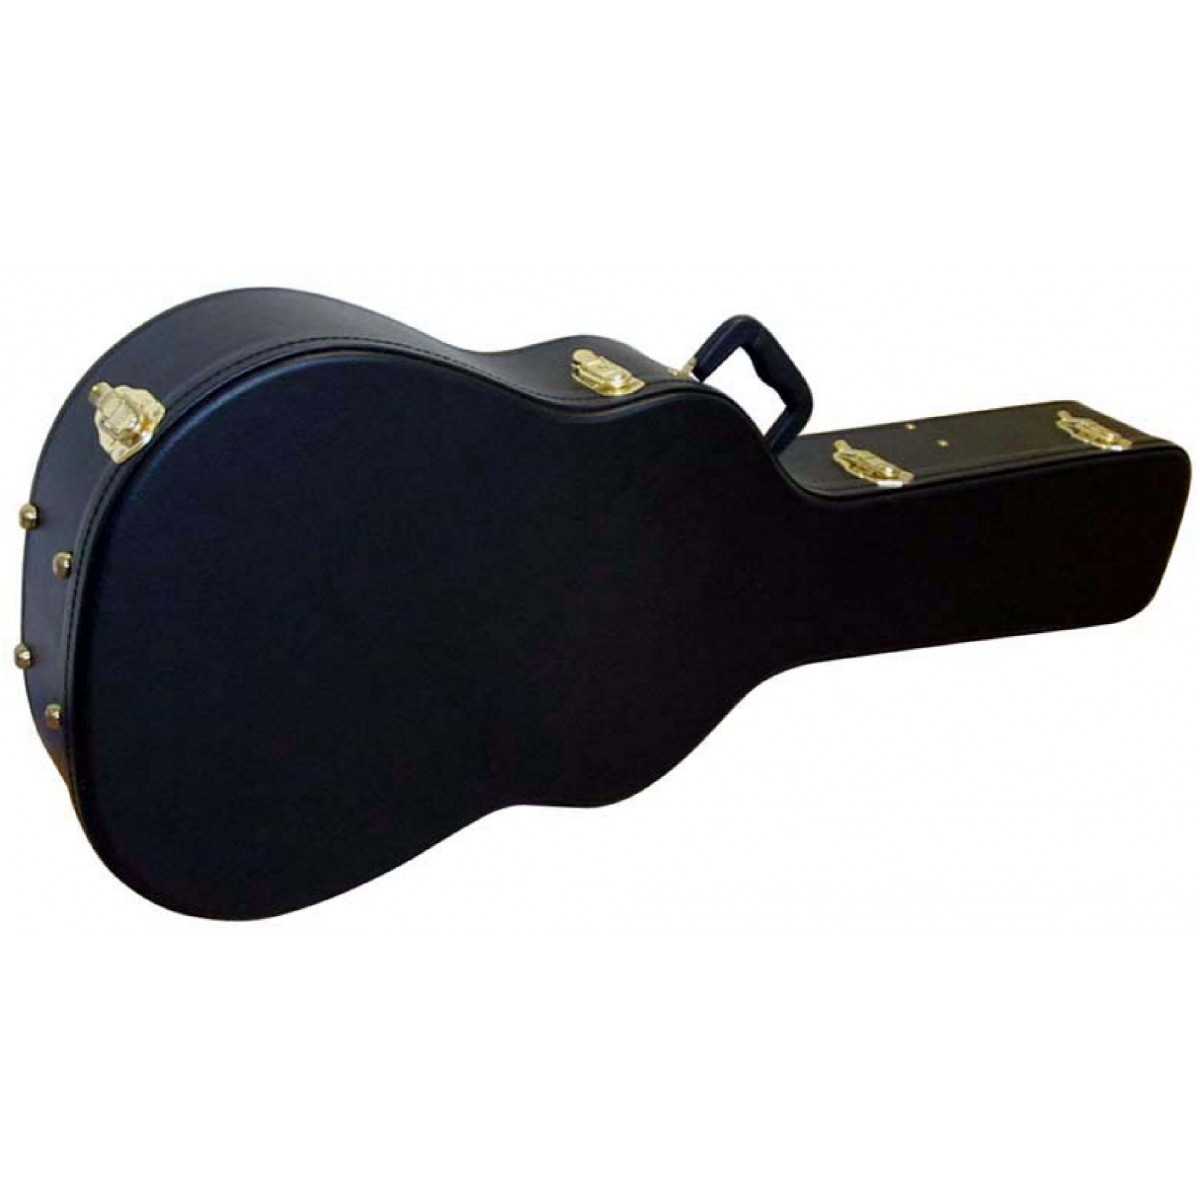 Fotografie Stagg GCA-W BK, tvarovaný kufr pro akustickou kytaru